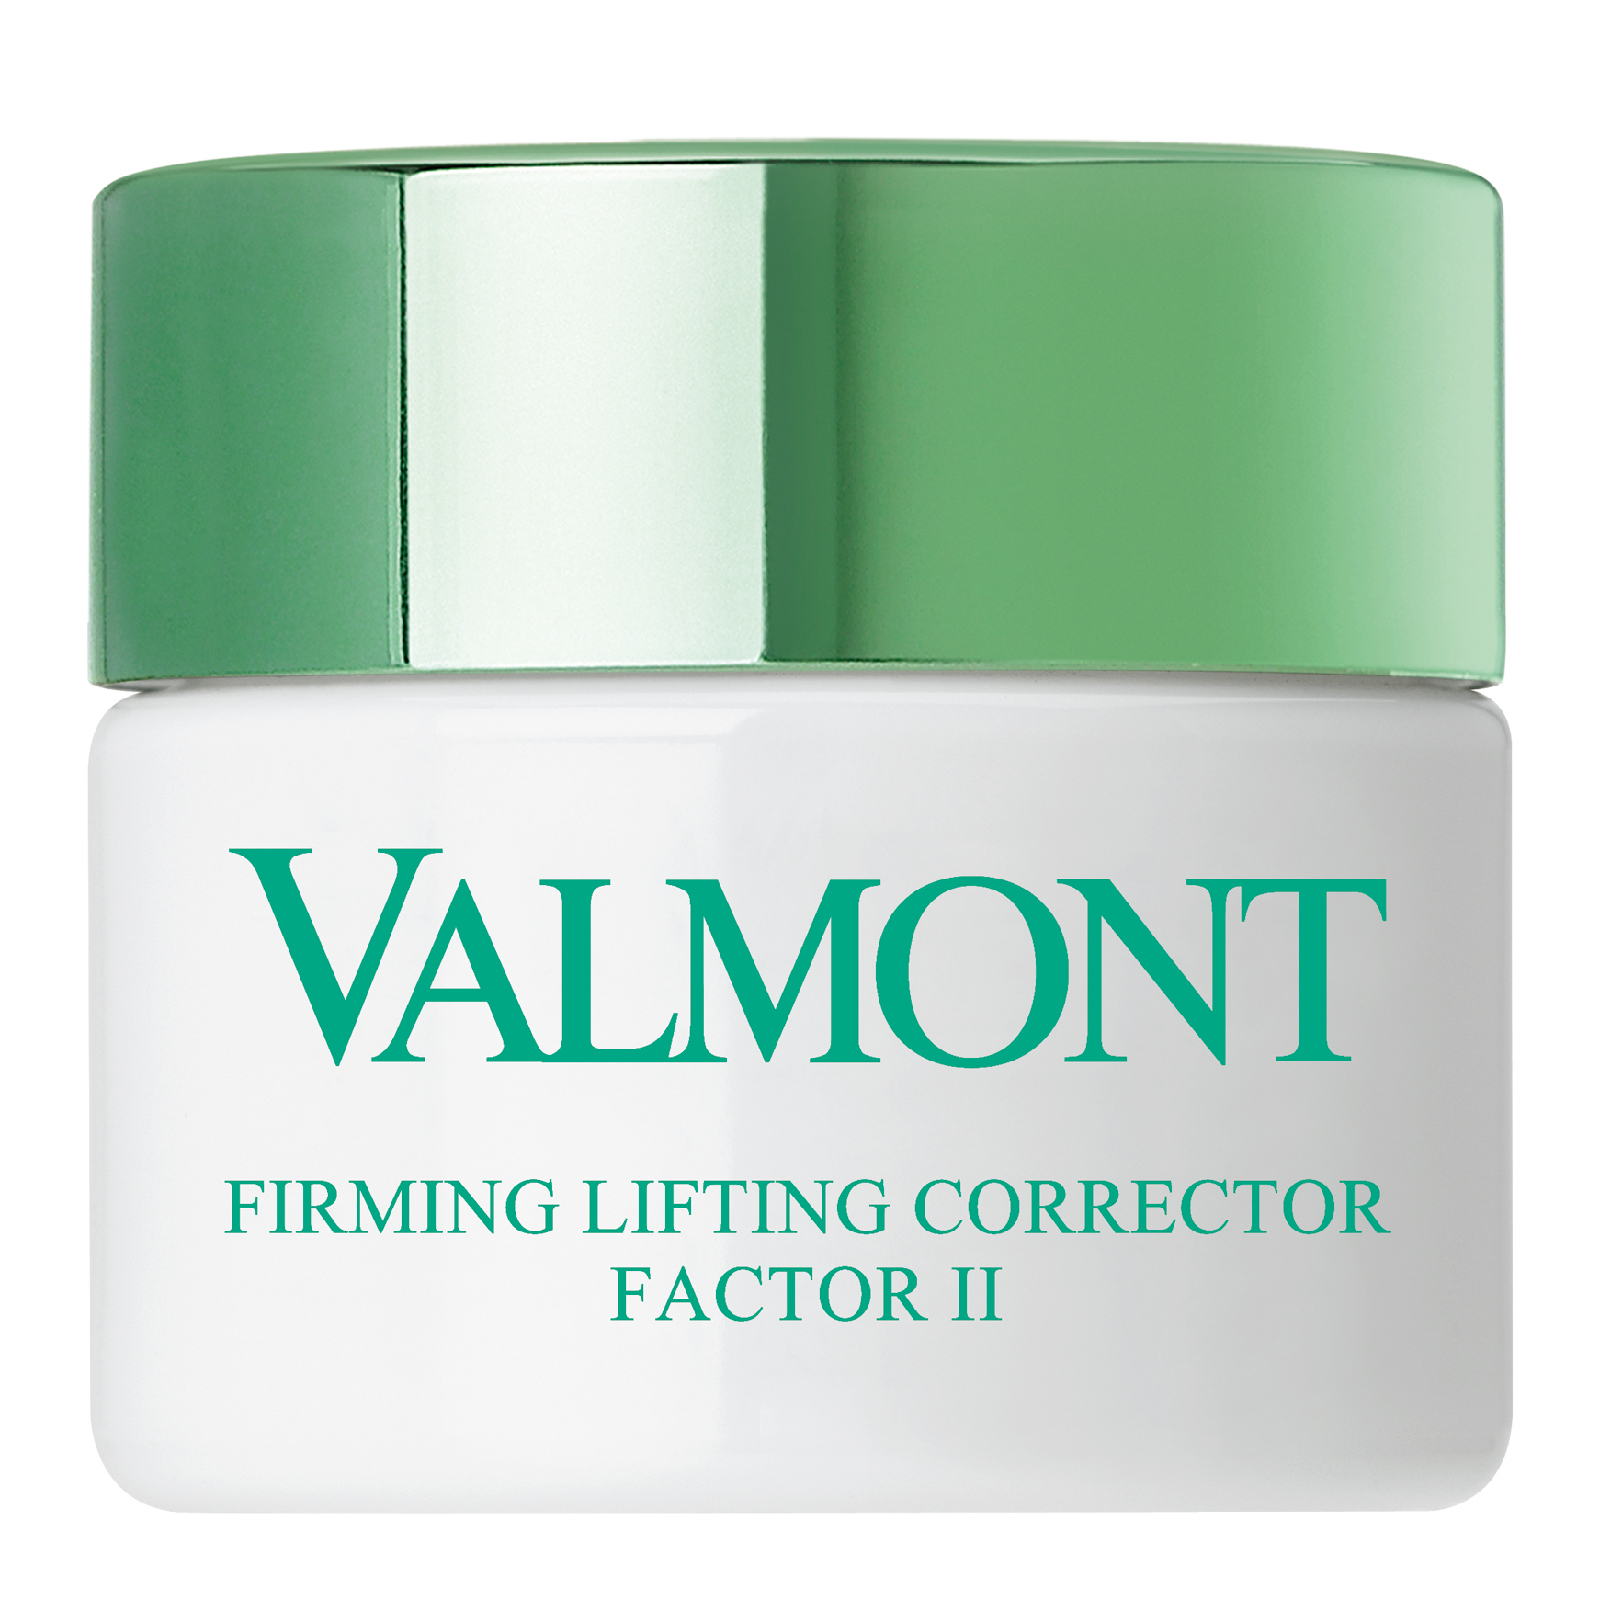 Crema reafirmante Firming Lifting Corrector Factor II de Valmont